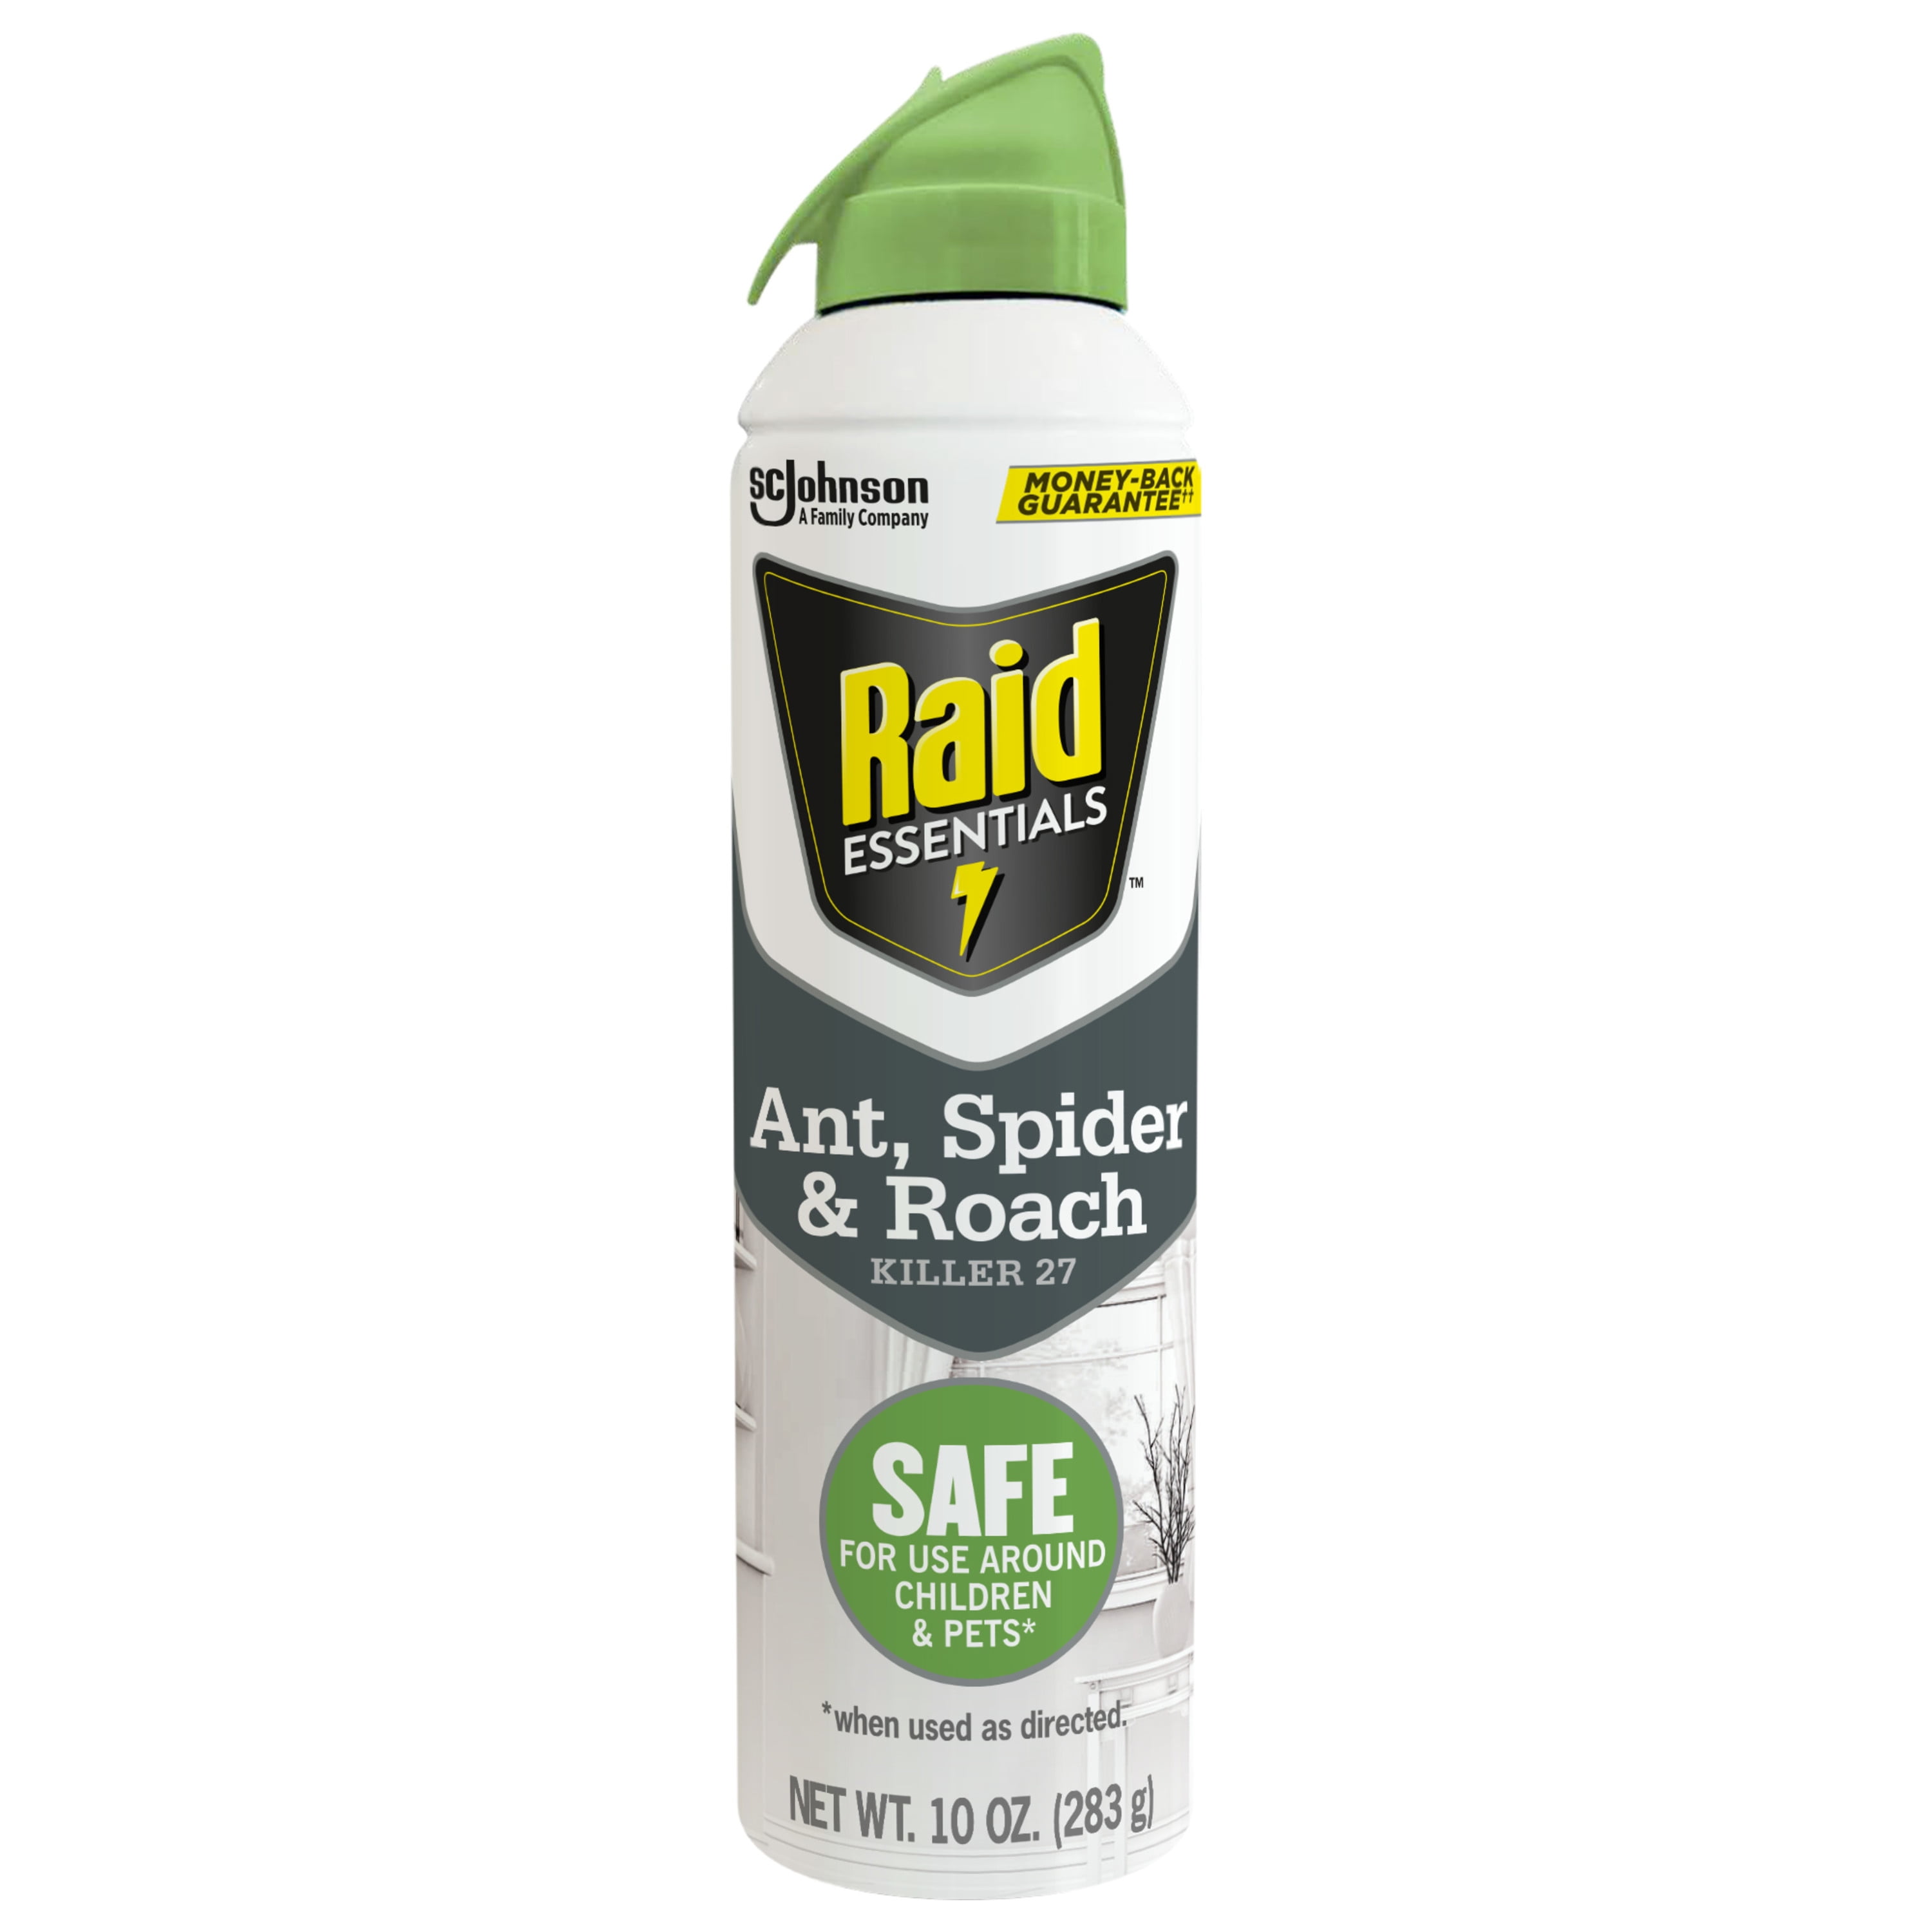 Raid Essentials Ant, Spider & Roach Killer 27, 10 oz Aerosol